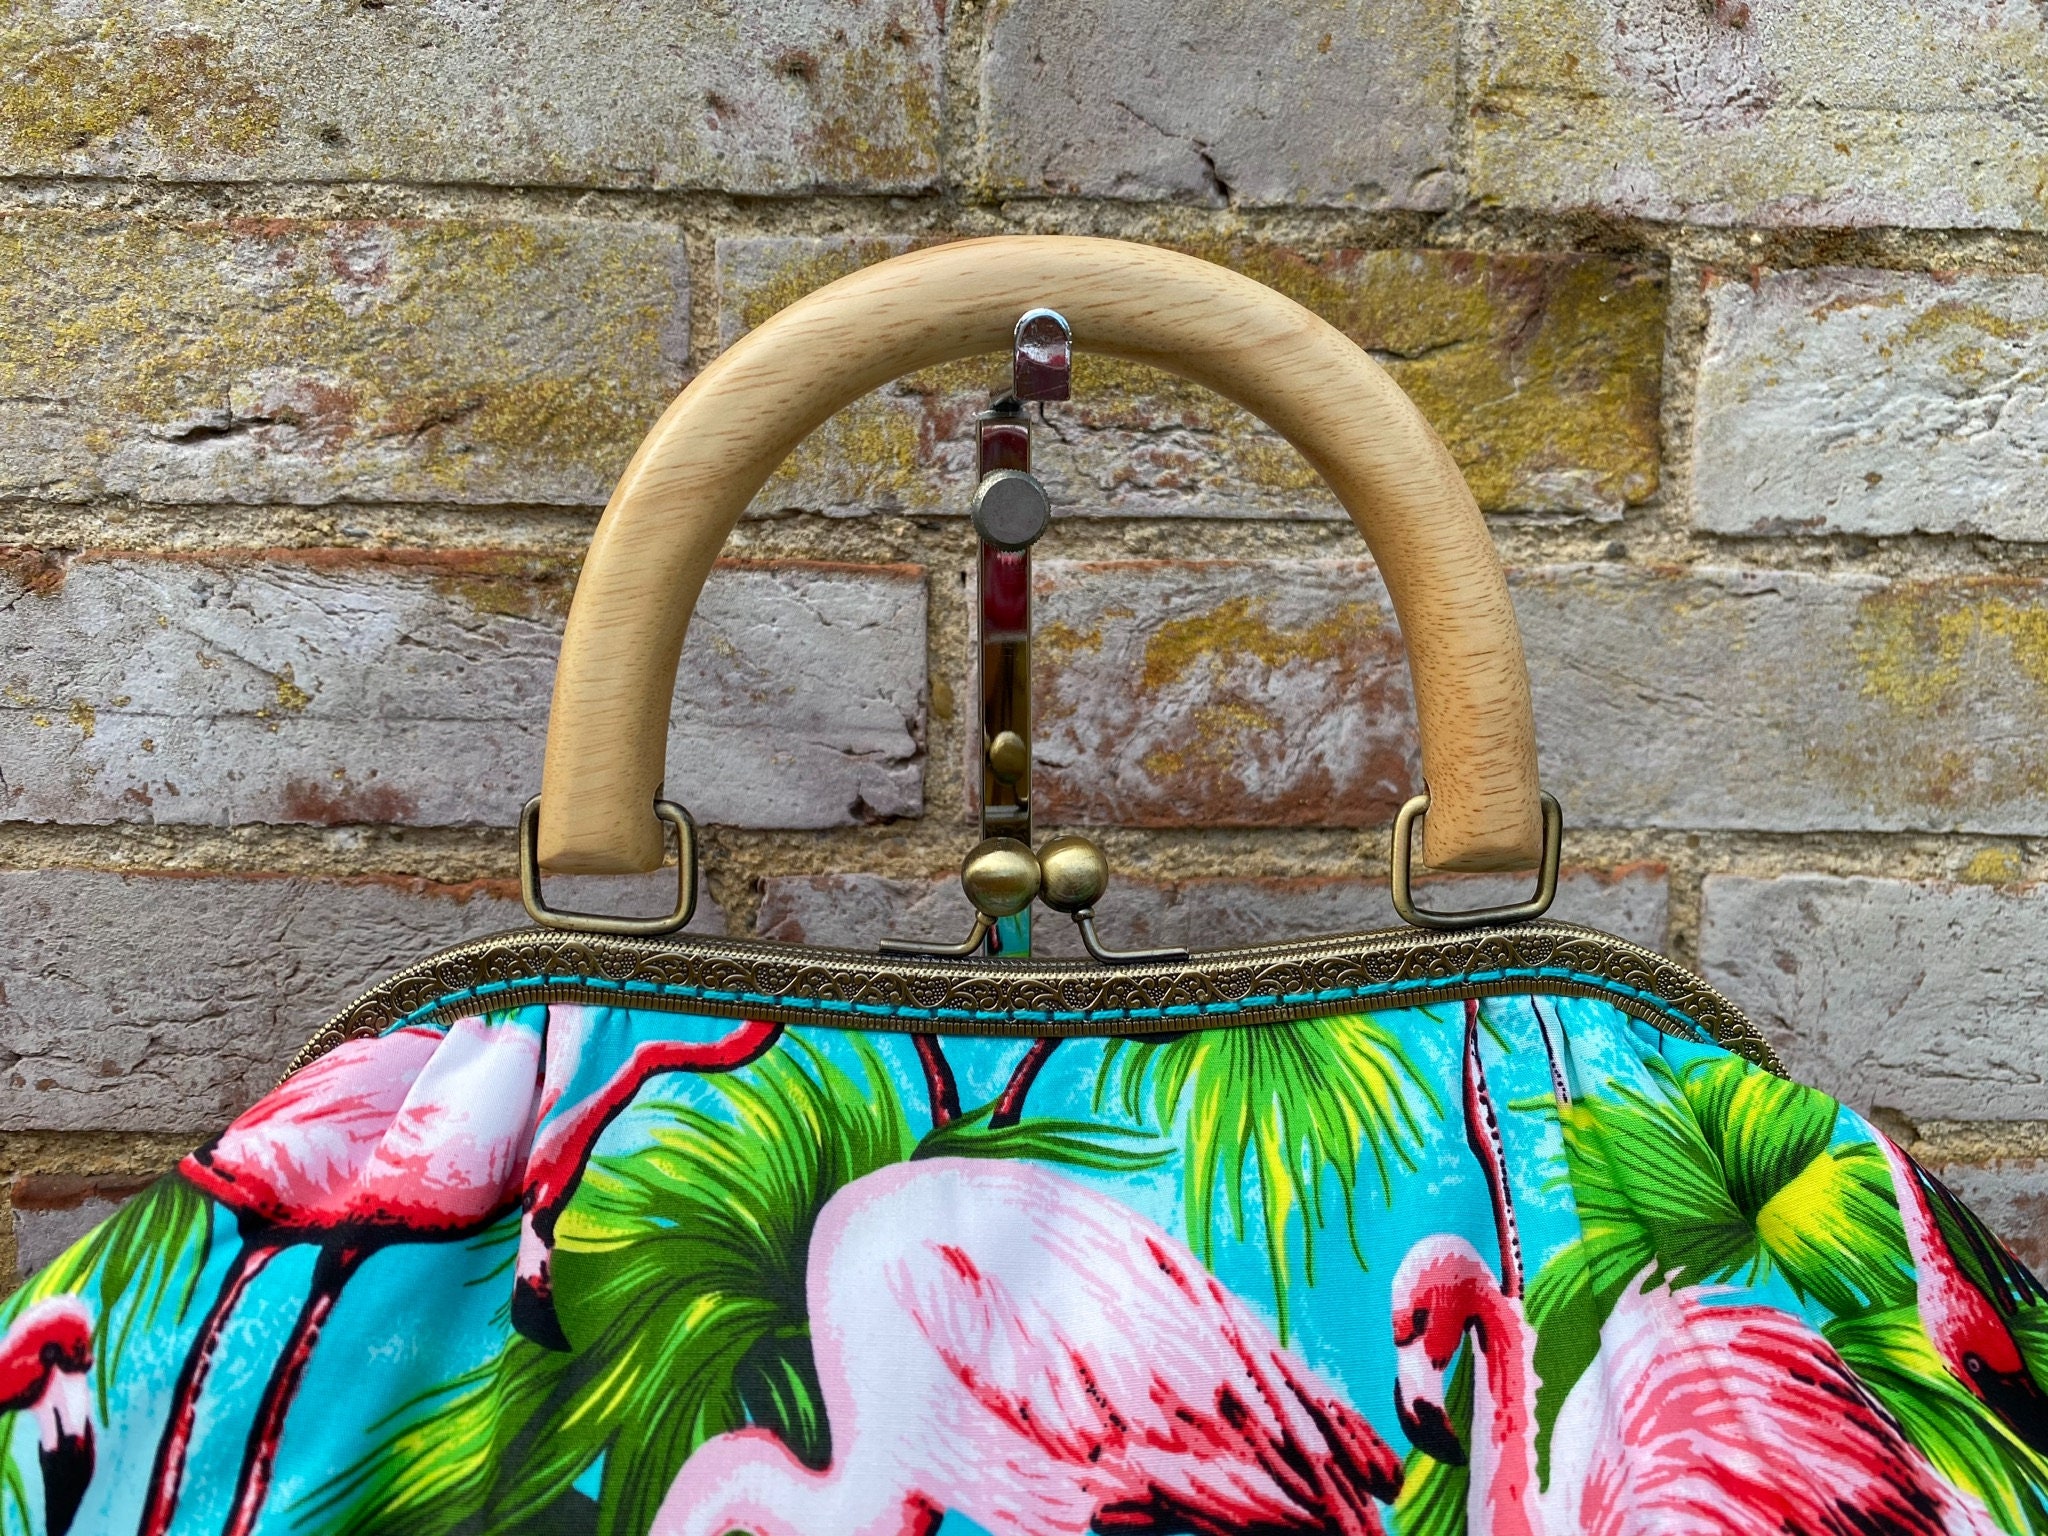 Flamingos fabric frame handbag Wooden handle Kiss clasp Shoulder bag Handmade by Purse Your Lips Kiss lock purse